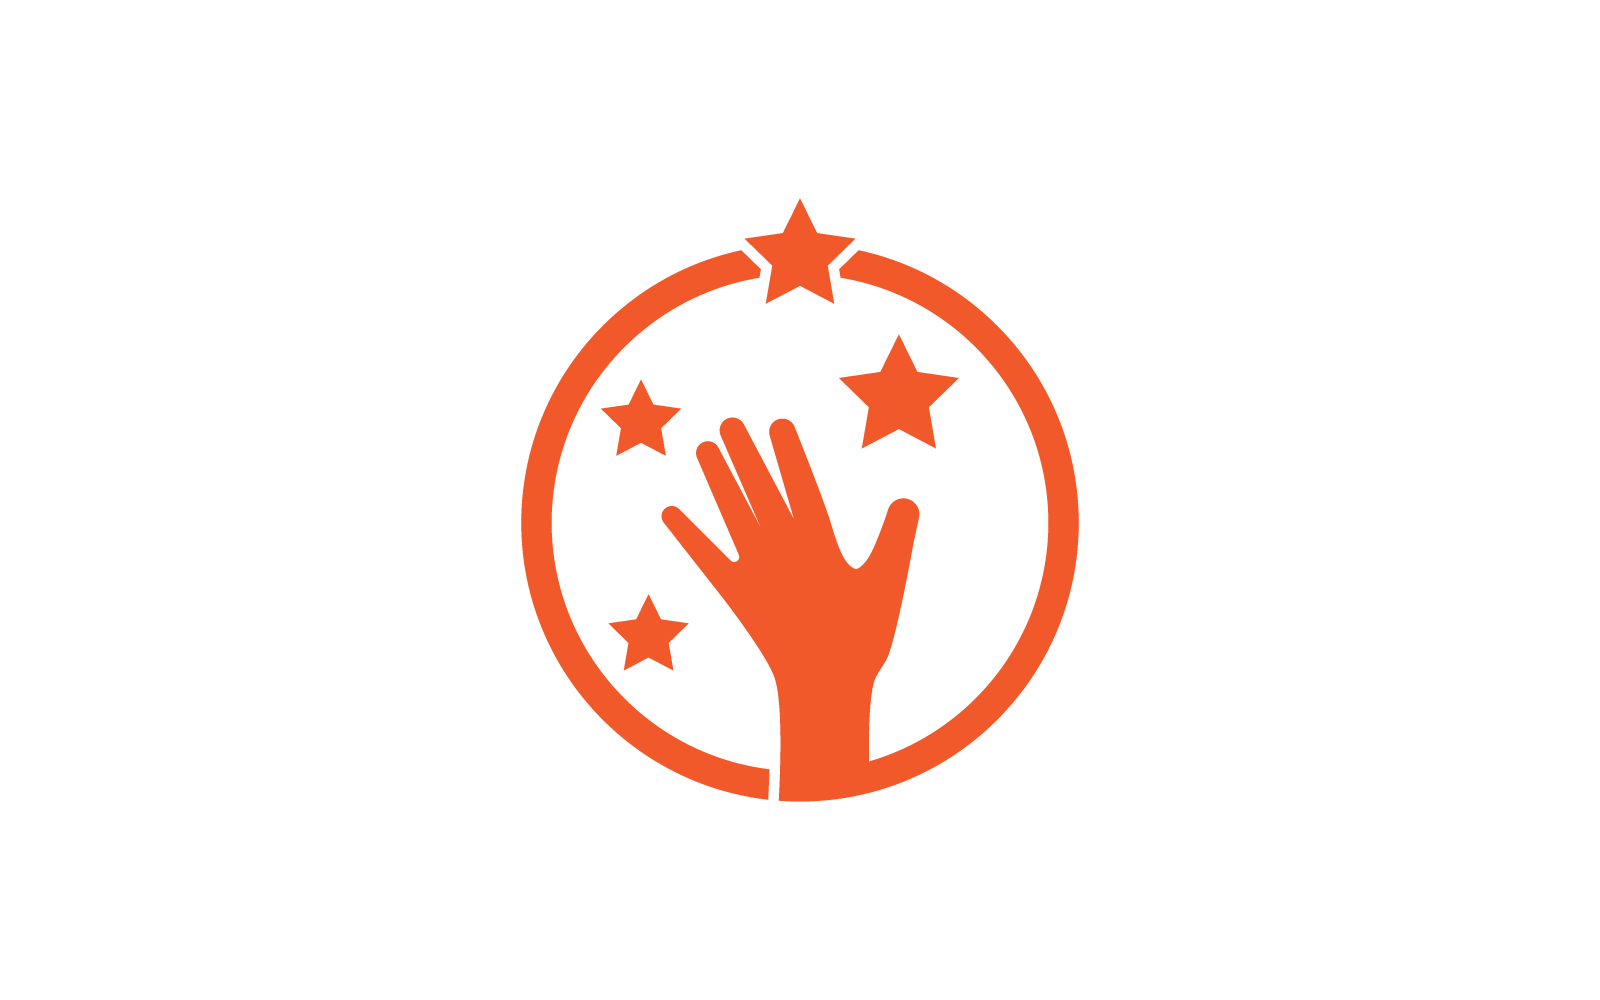 Hand and star logo illustration flat design